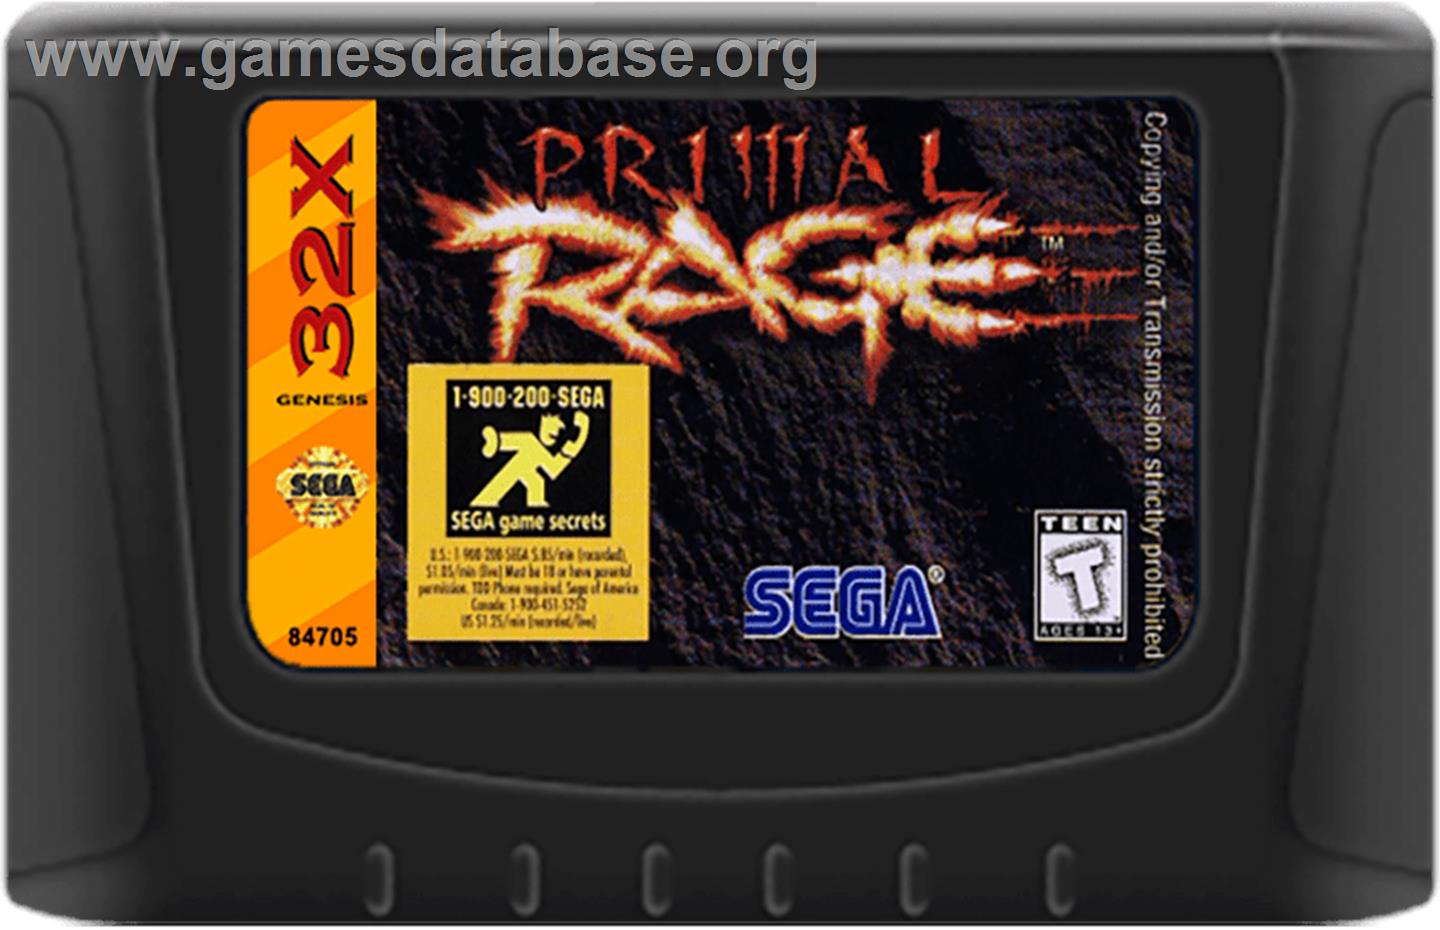 Primal Rage - Sega 32X - Artwork - Cartridge